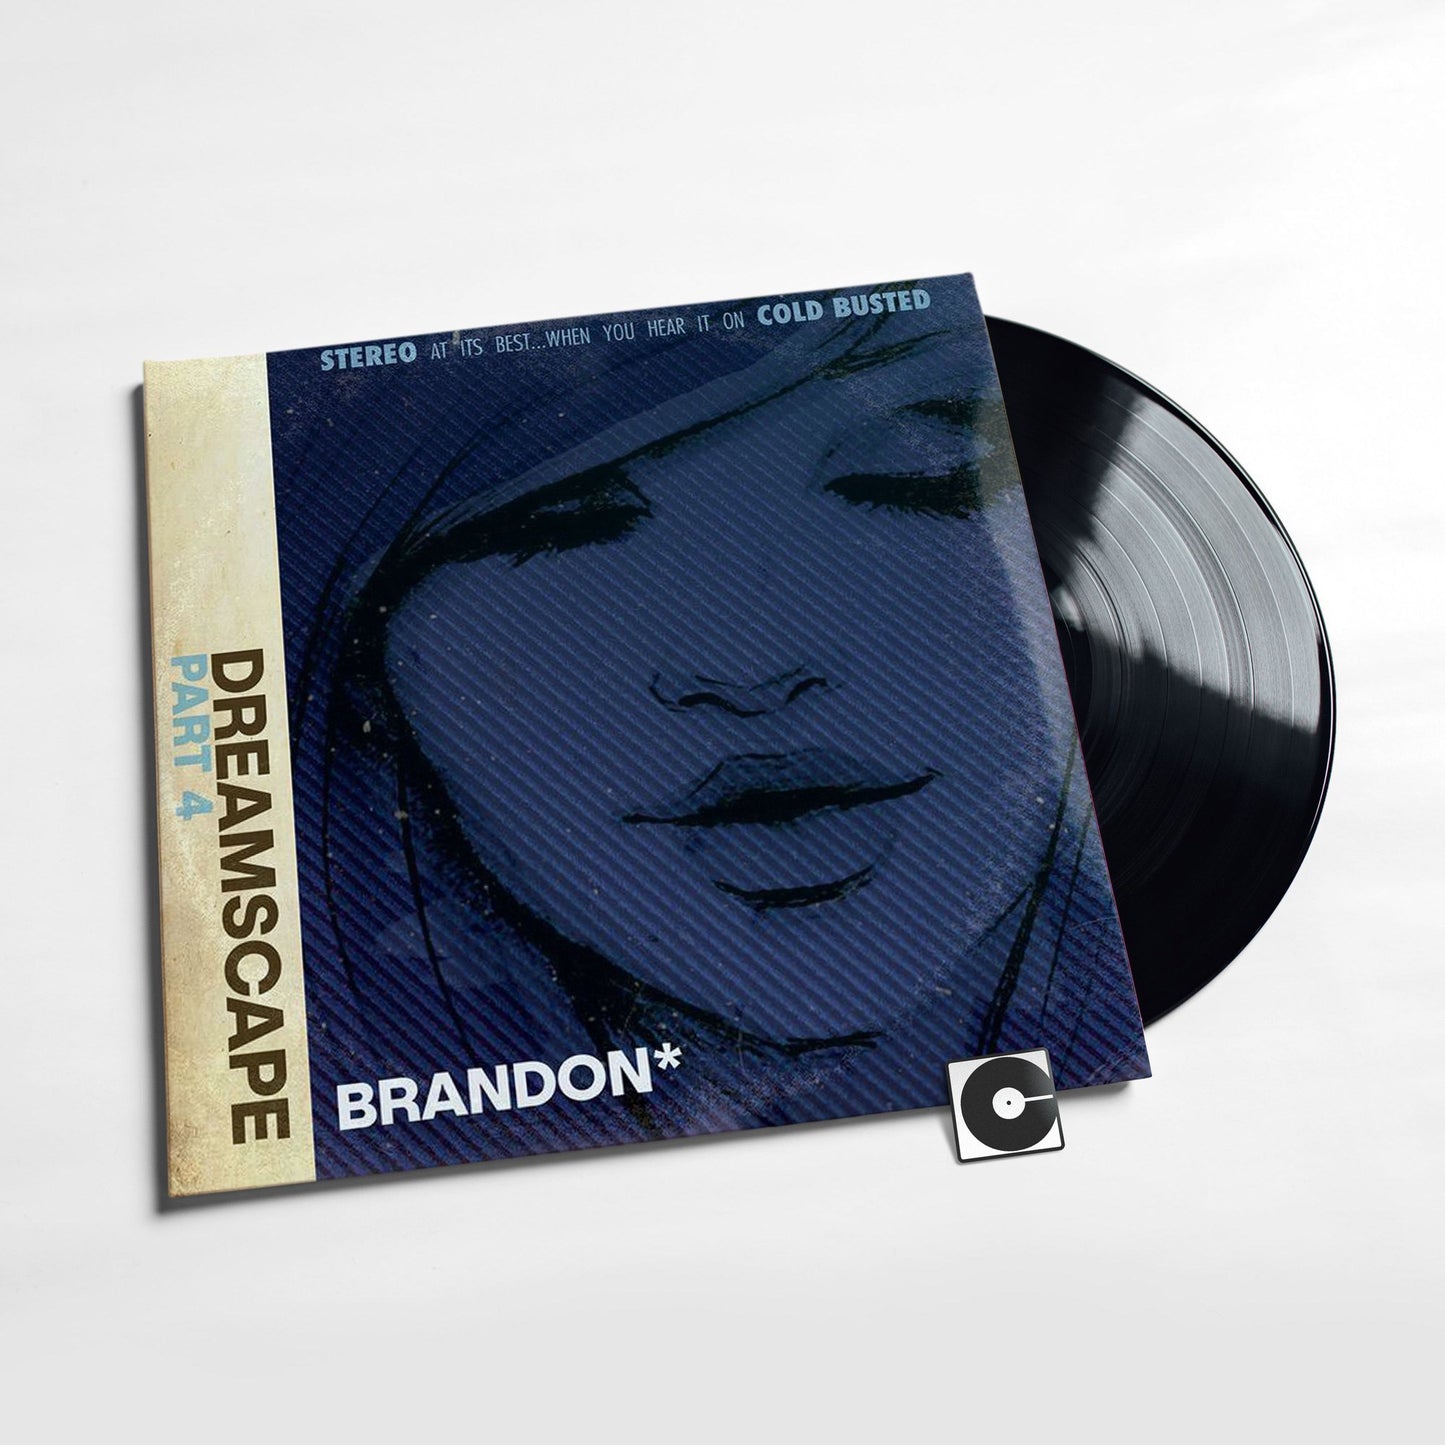 Brandon - "Dreamscape: Part 4"